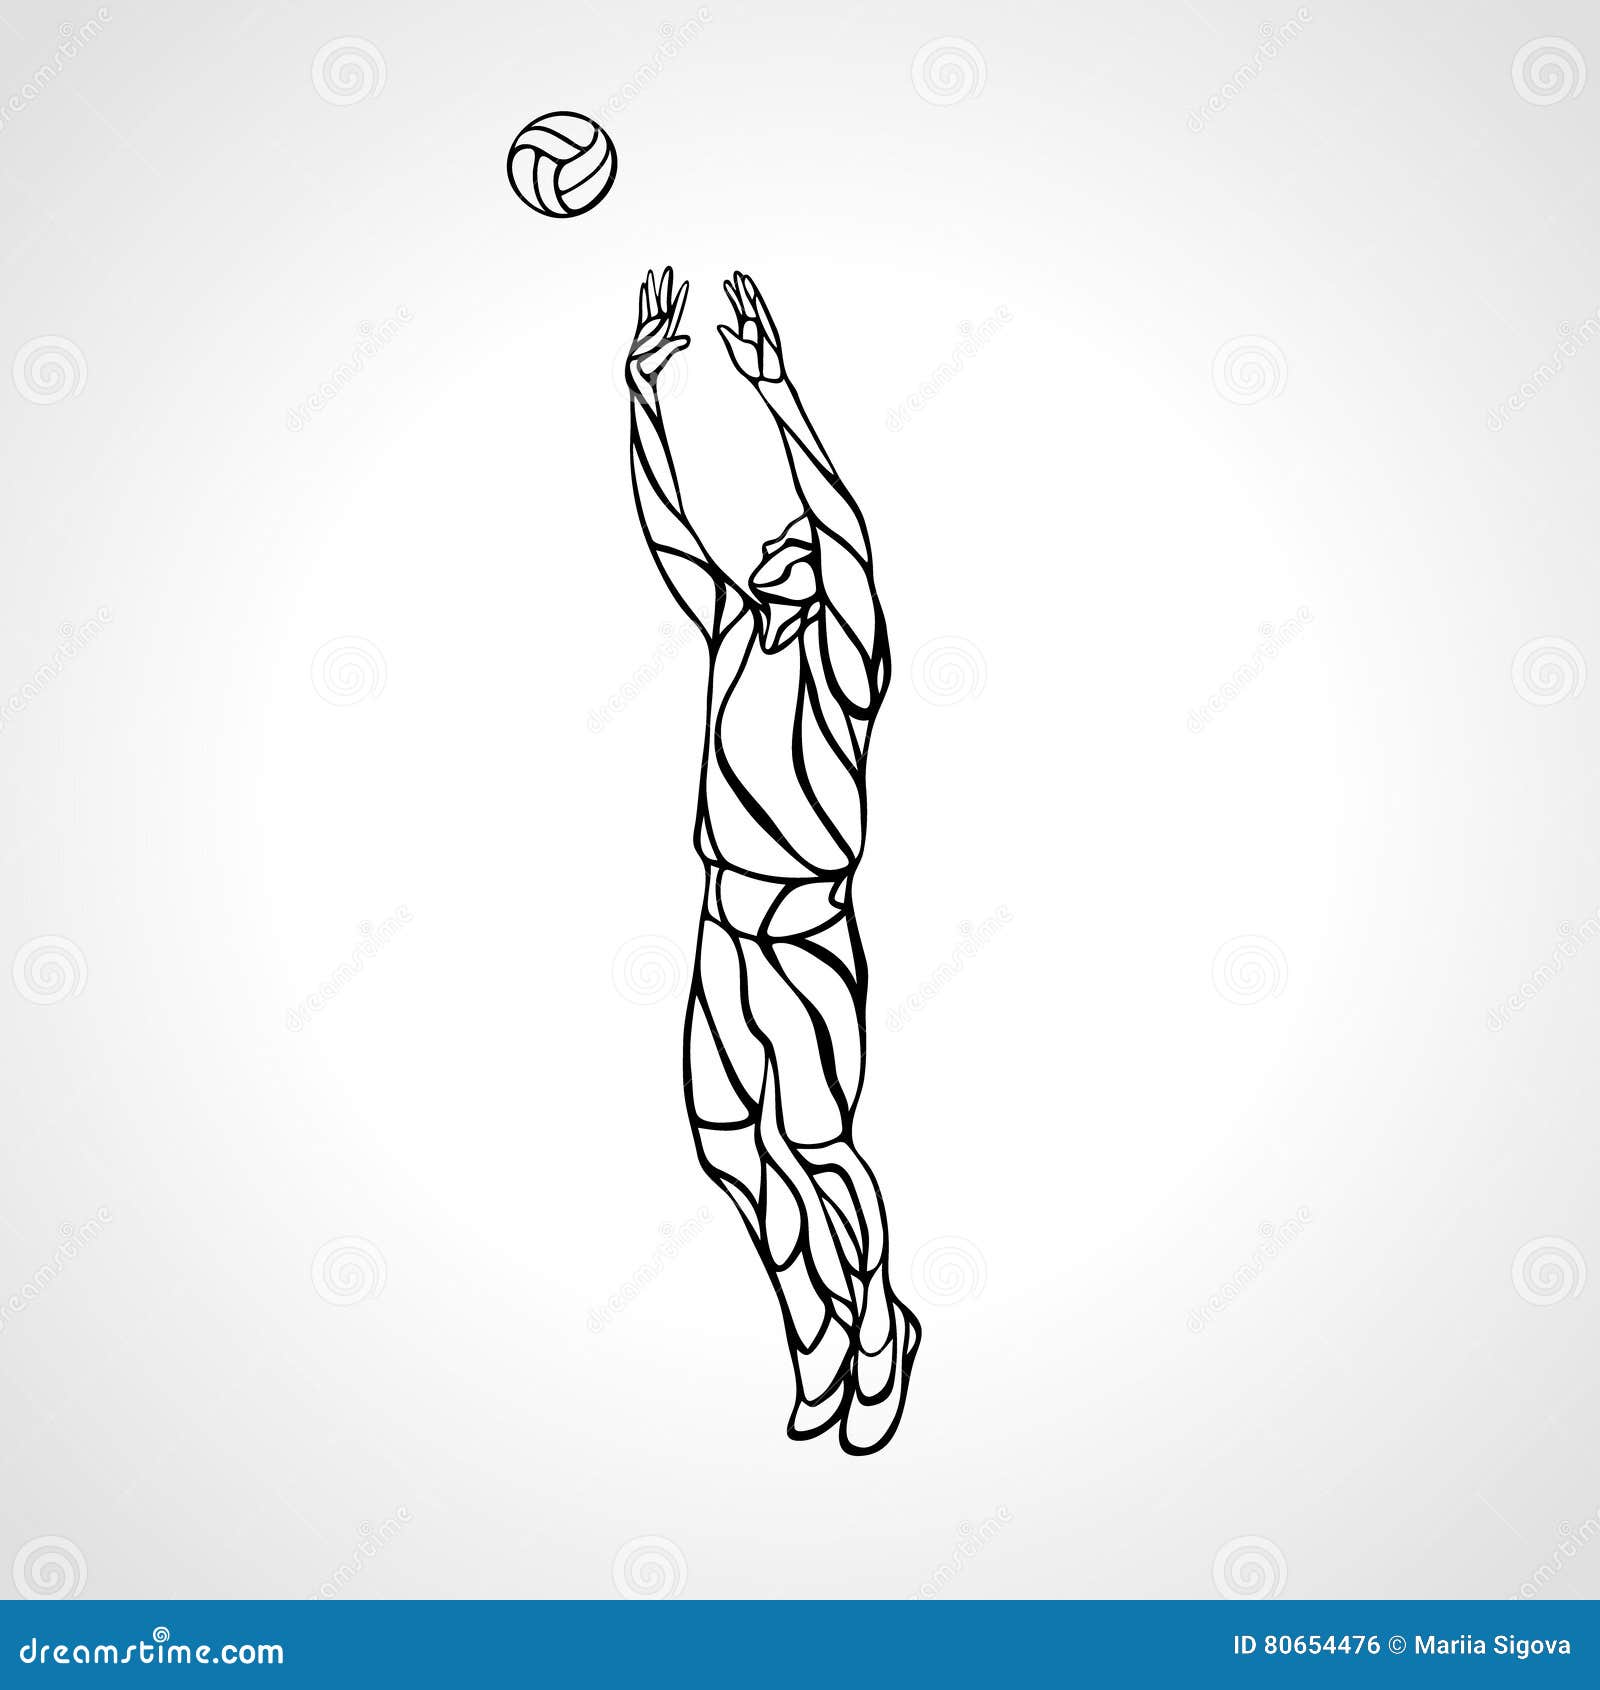 Volleyball Setter Silhouette, Vector Illustration Stock Vector ...